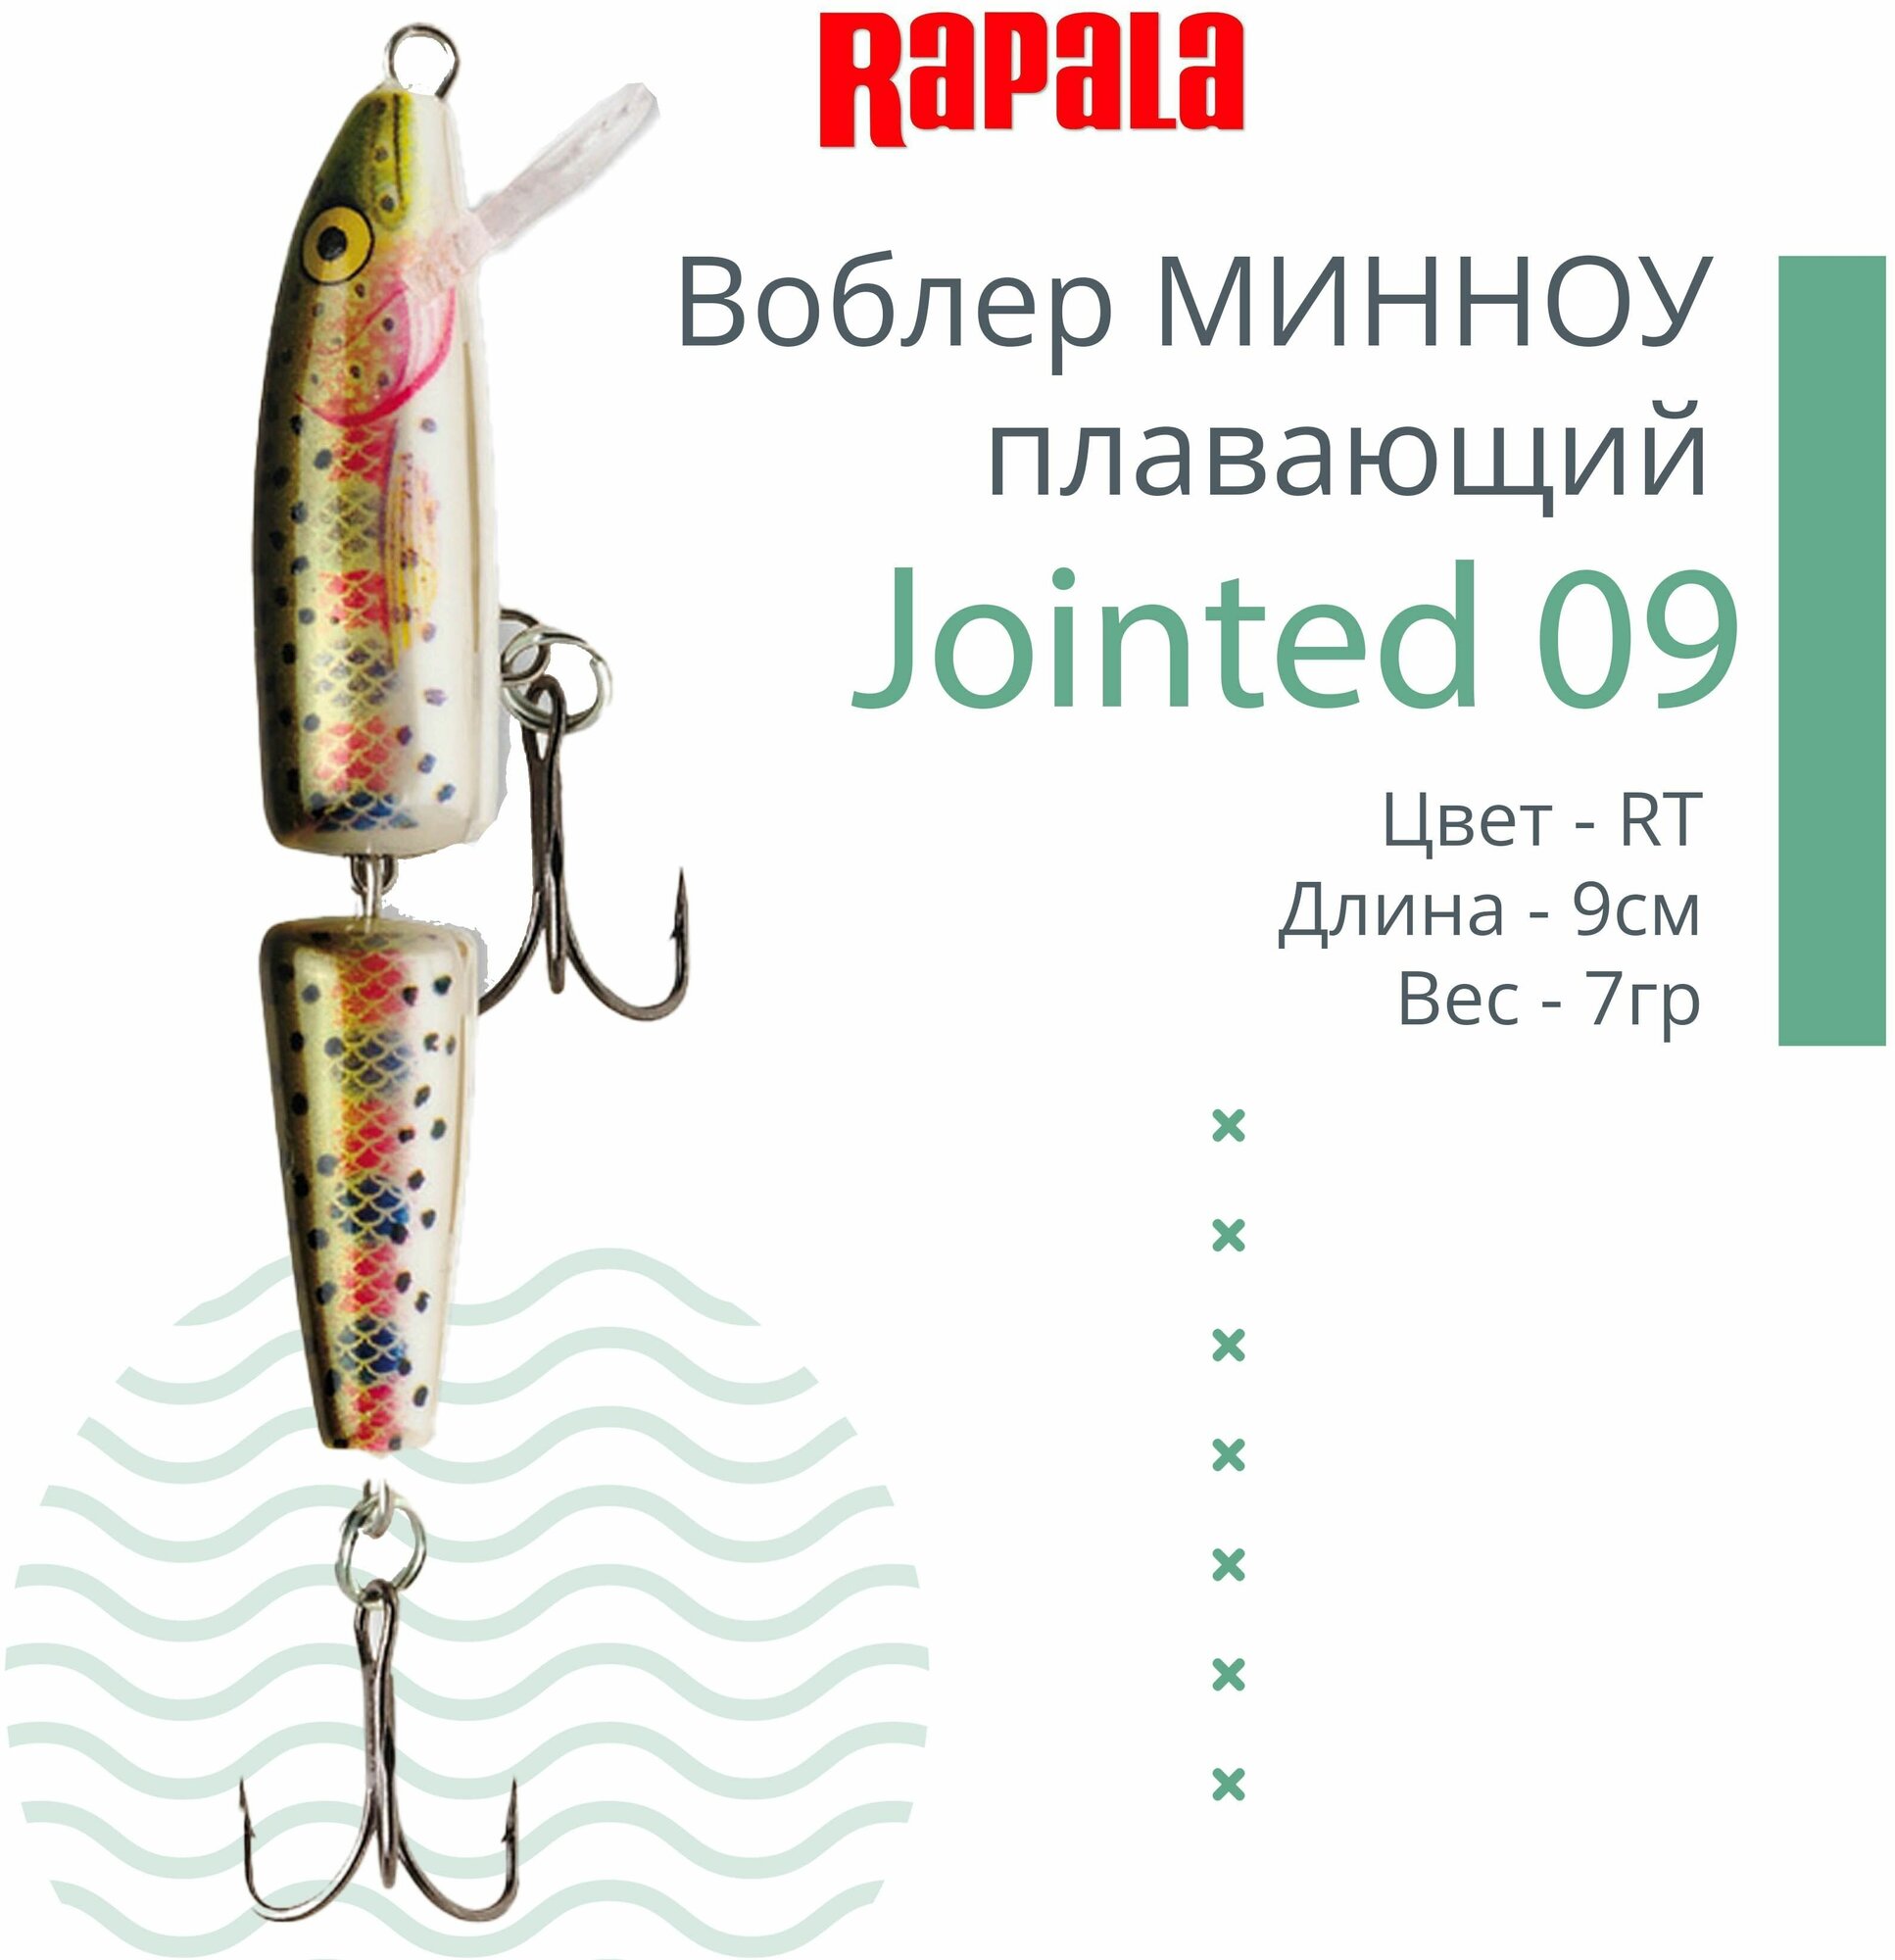 Воблер для рыбалки RAPALA Jointed 09, 9см, 7гр, цвет RT, плавающий